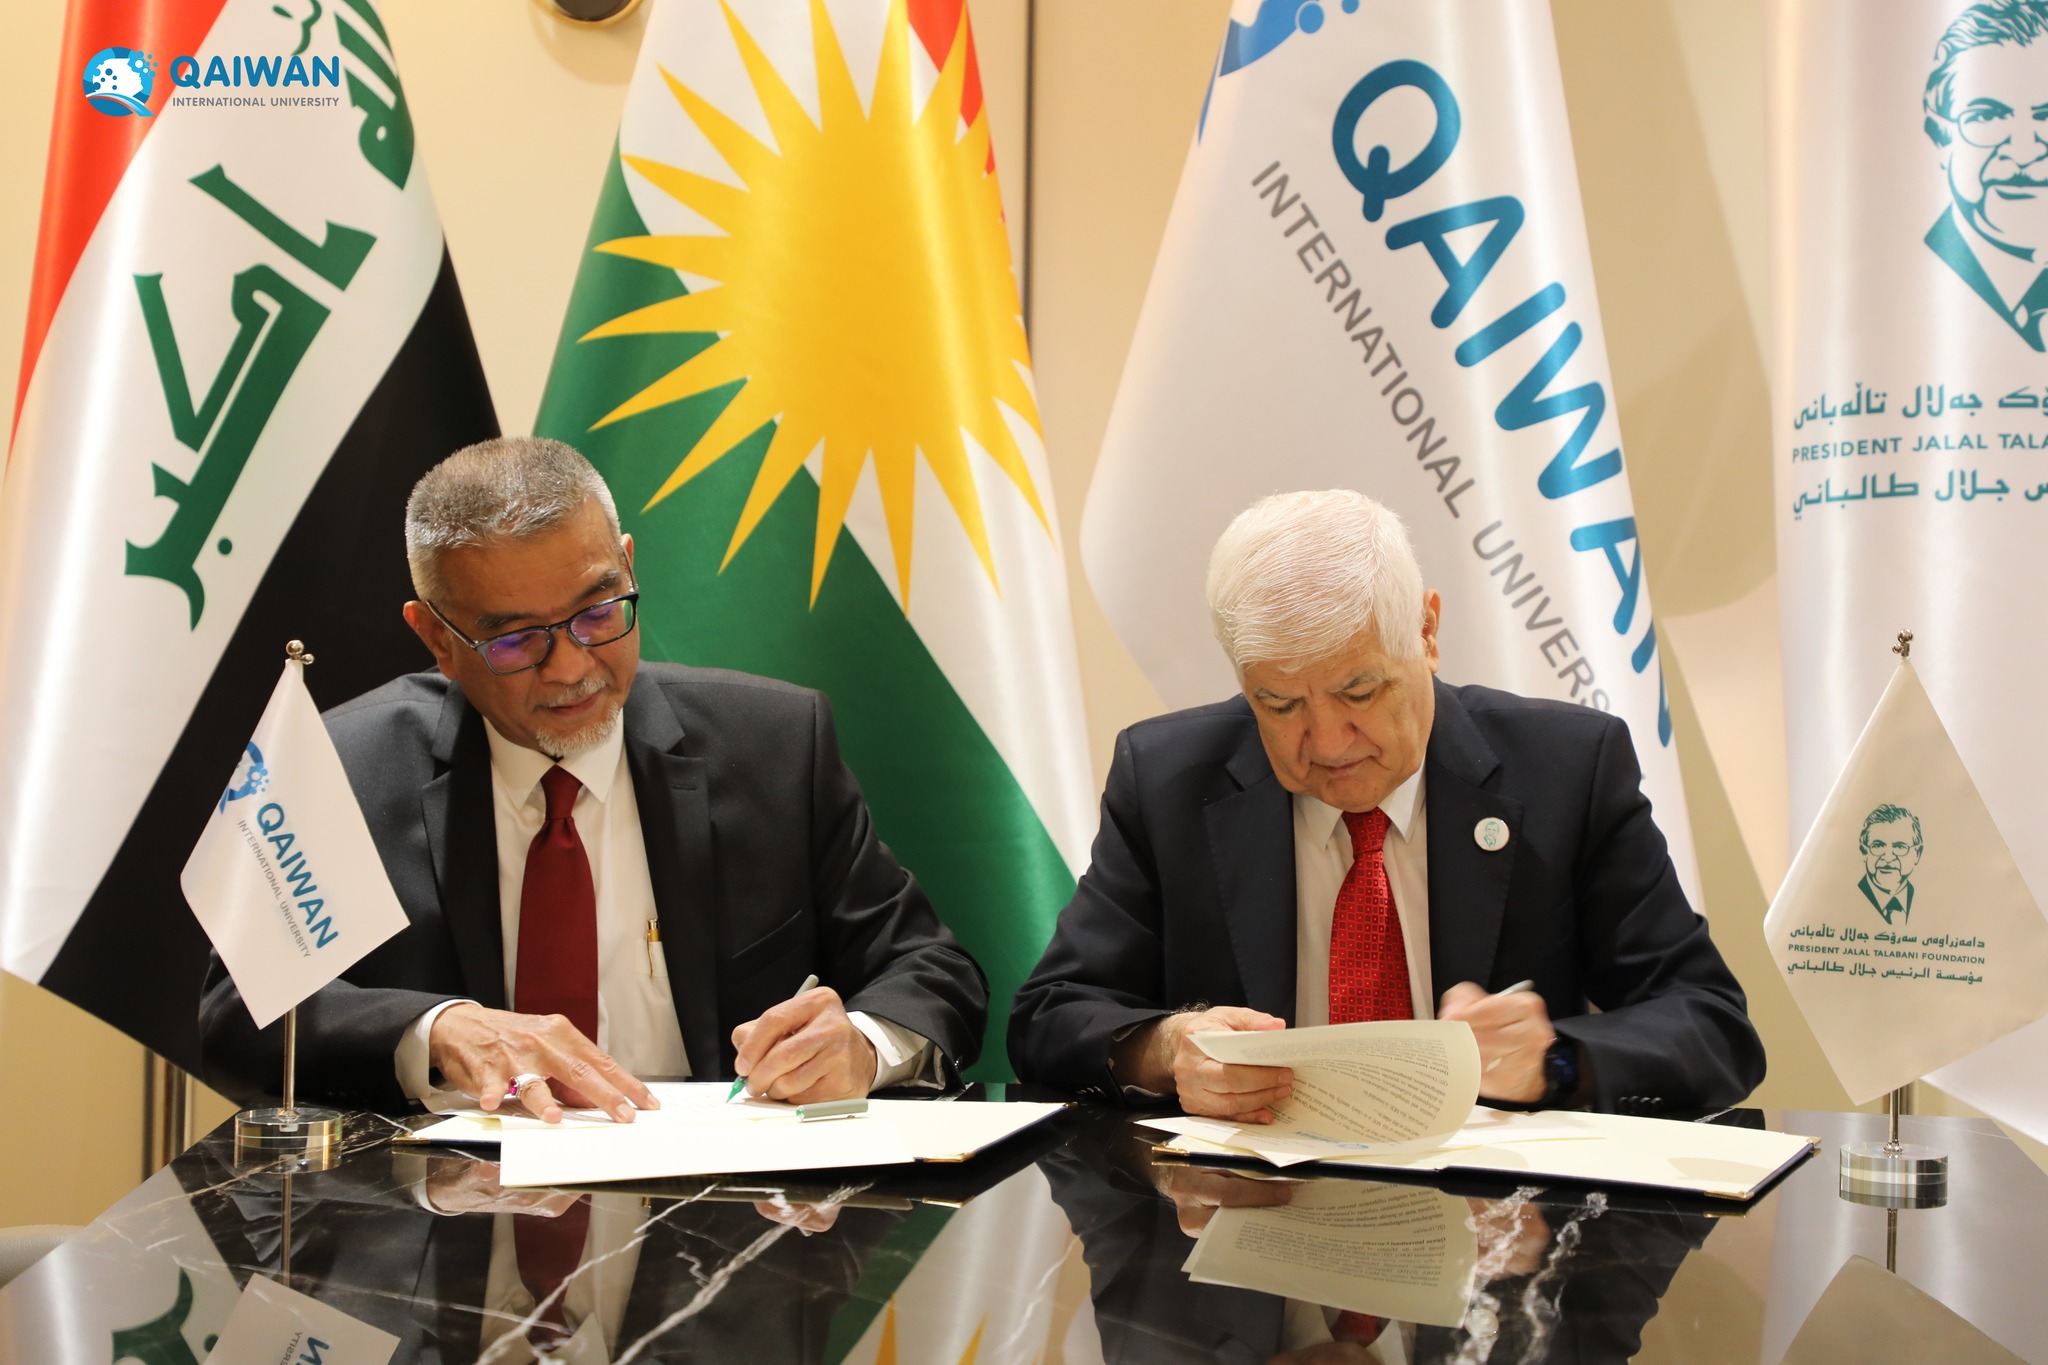 Formal memorandum of understanding was signed between (Qaiwan International University) and the (President Jalal Talabani Foundation)